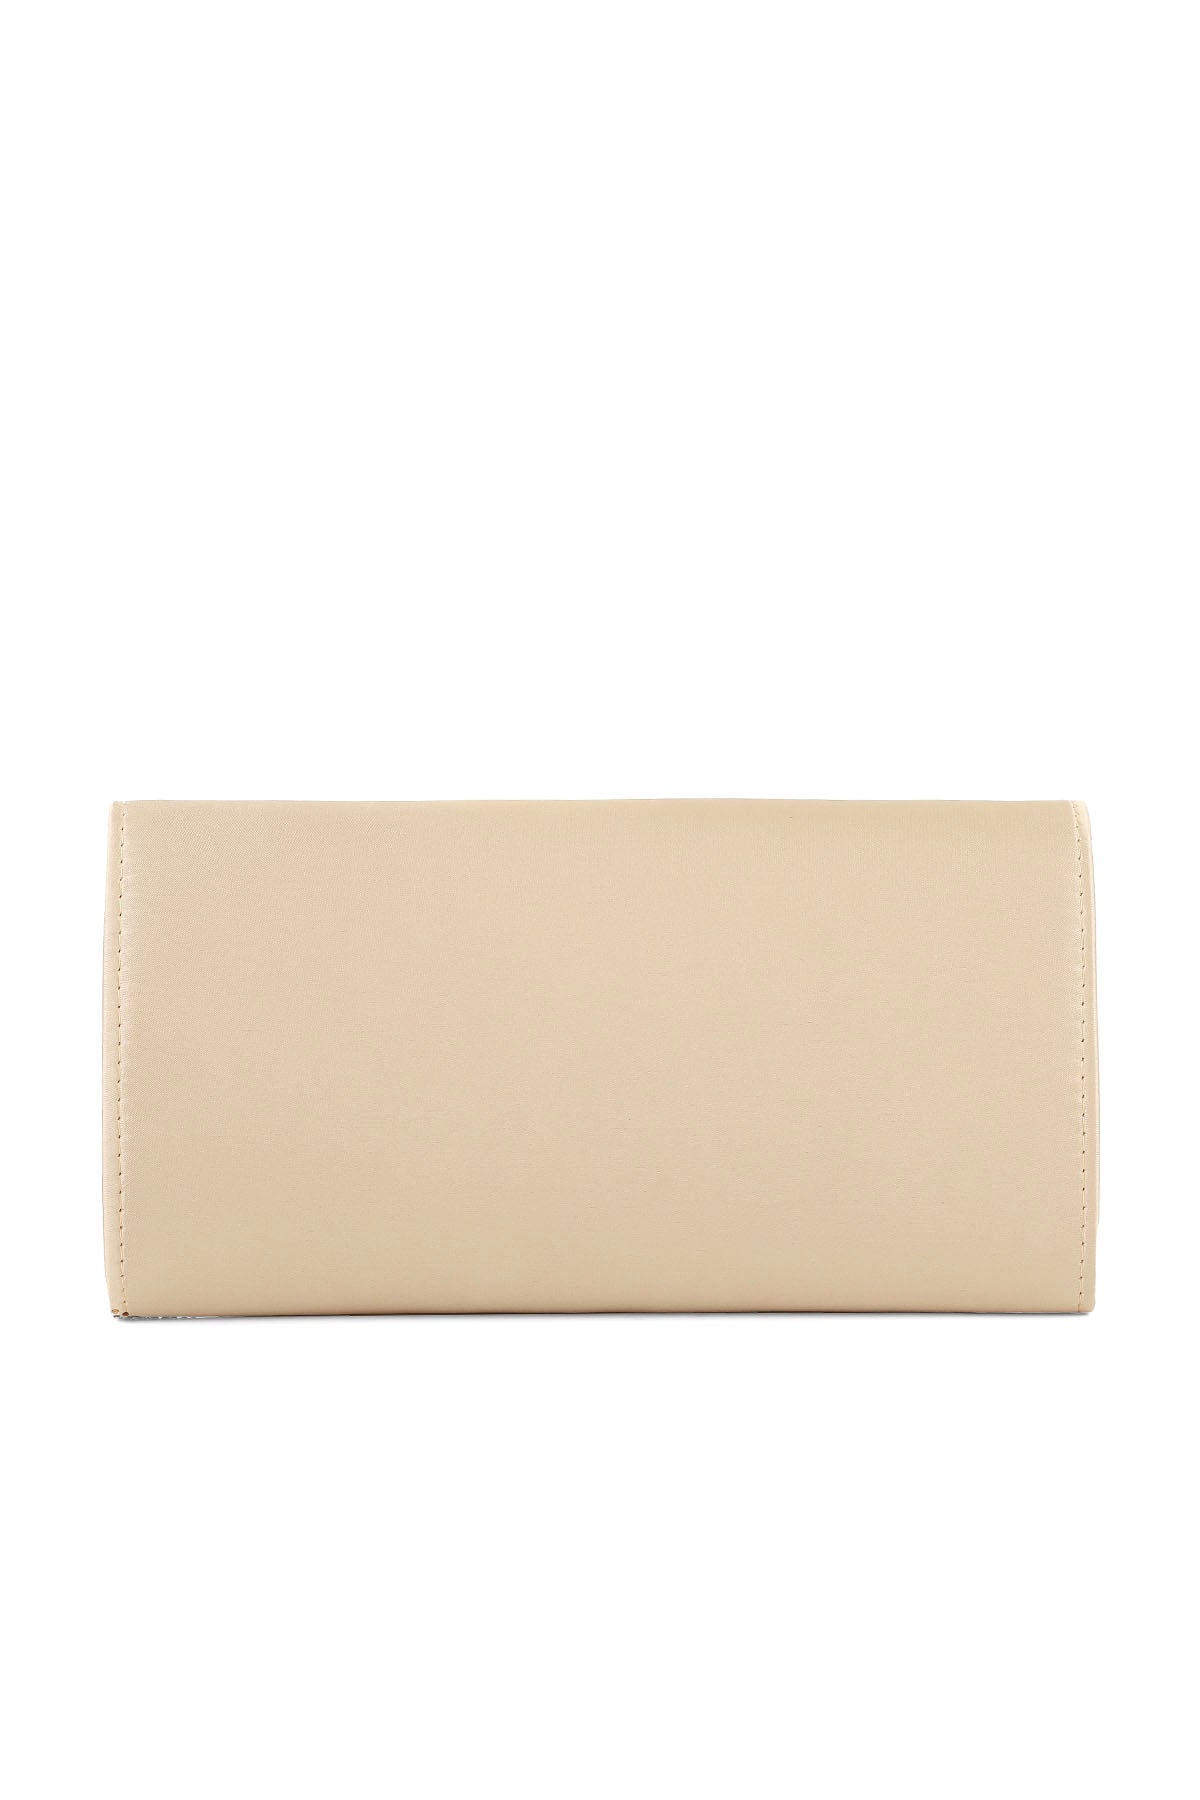 Flap Shoulder Bags B21582-Golden